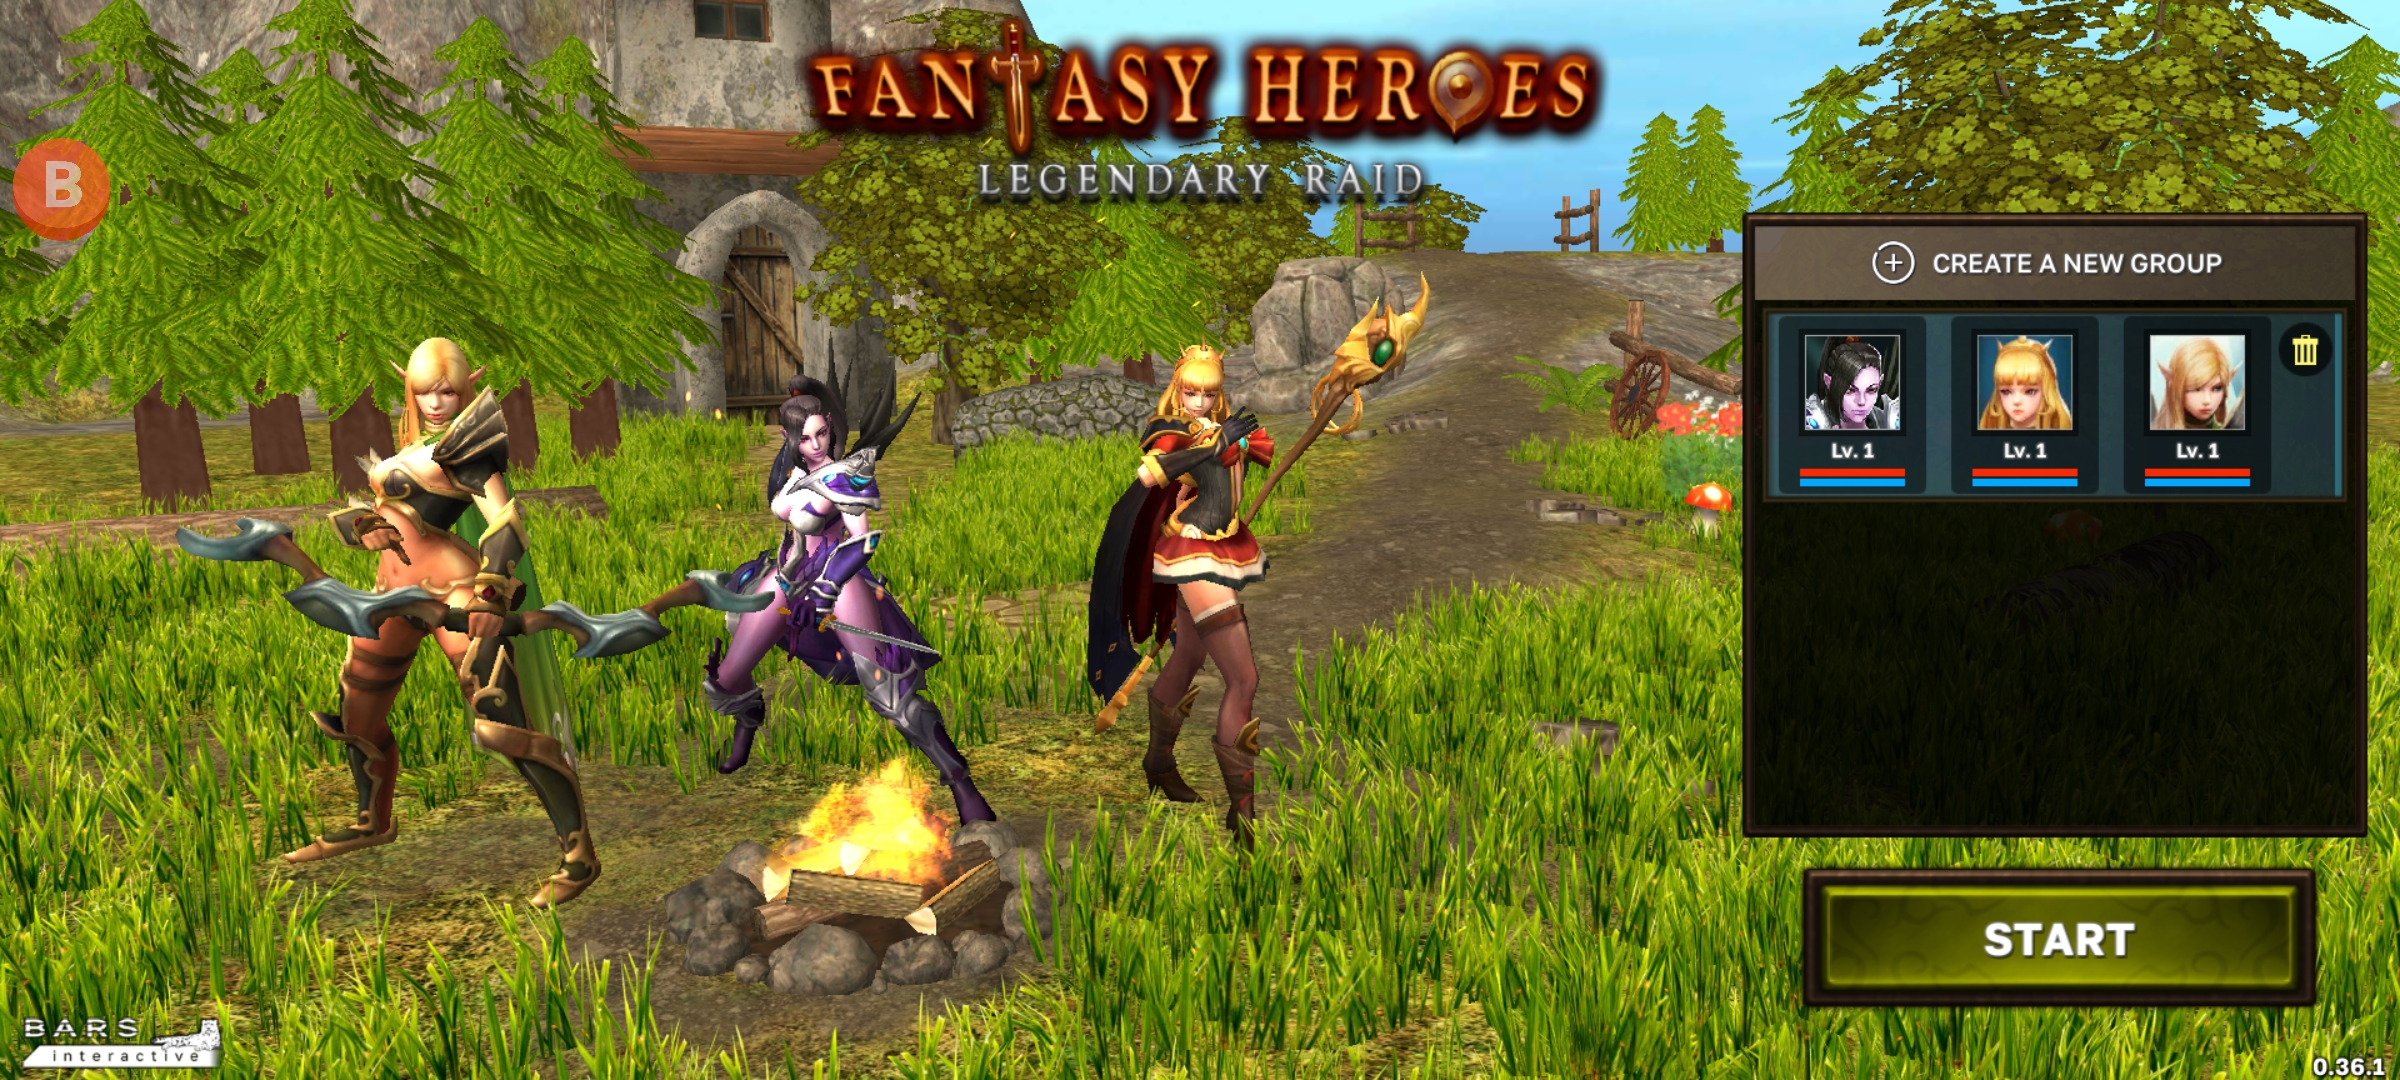 [Game Android] Fantasy Heroes: Epic Raid RPG